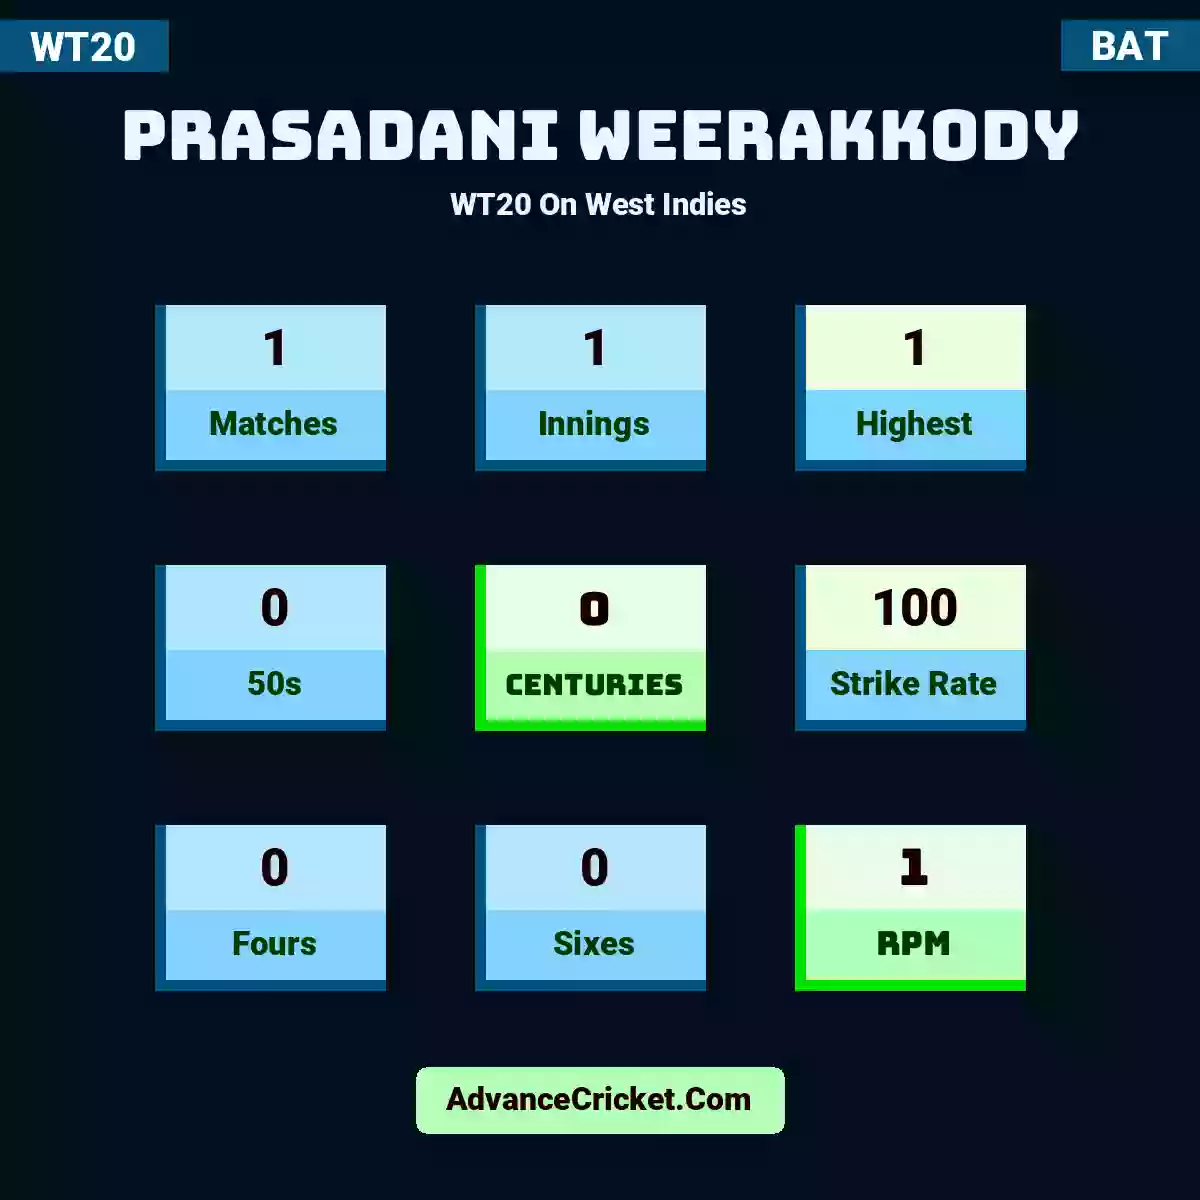 Prasadani Weerakkody WT20  On West Indies, Prasadani Weerakkody played 1 matches, scored 1 runs as highest, 0 half-centuries, and 0 centuries, with a strike rate of 100. P.Weerakkody hit 0 fours and 0 sixes, with an RPM of 1.